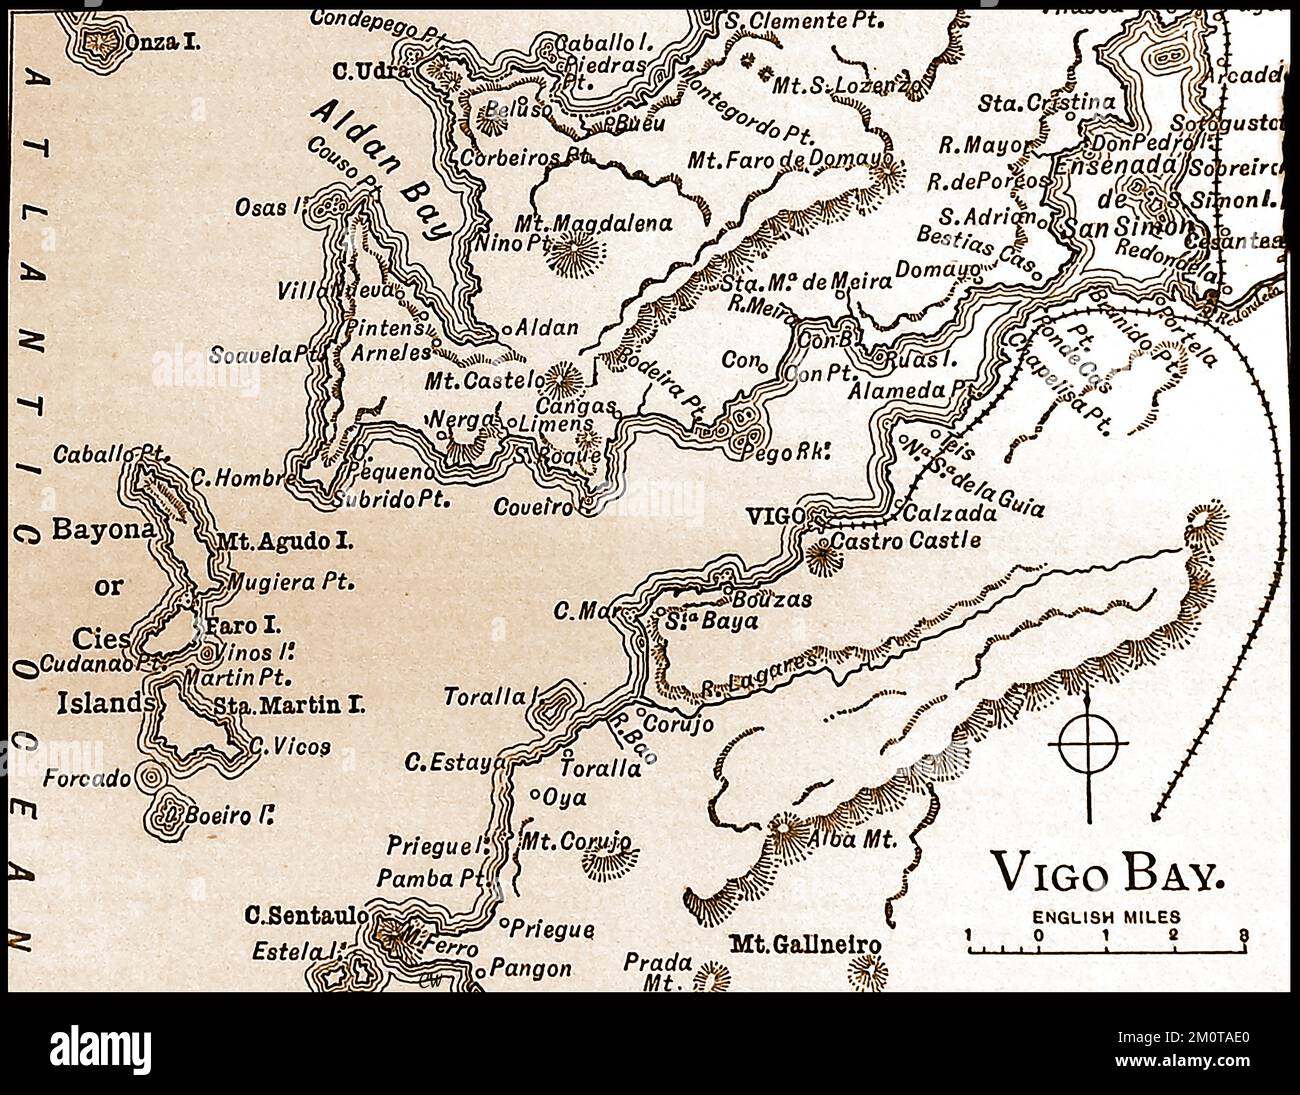 Une carte de 19th siècles de la scène de la zone de la baie de Vigo de la bataille de la baie de Vigo, également connue sous le nom de la bataille de Rande, de la escena del área de la Bahía de Vigo de la Batalla de la Bahía de Vigo, También conocida como la Batalla de Rande y la Batalla de Rande), una batalla naval librada el 23 de octubre de 1702. - Une carte du 19ème siècle de la scène de la région de la baie de Vigo de la bataille de la baie de Vigo, -- Een 19E-eeuwse kaart van de Vigo Bay gebied scène van de Slag om Vigo Bay, Banque D'Images